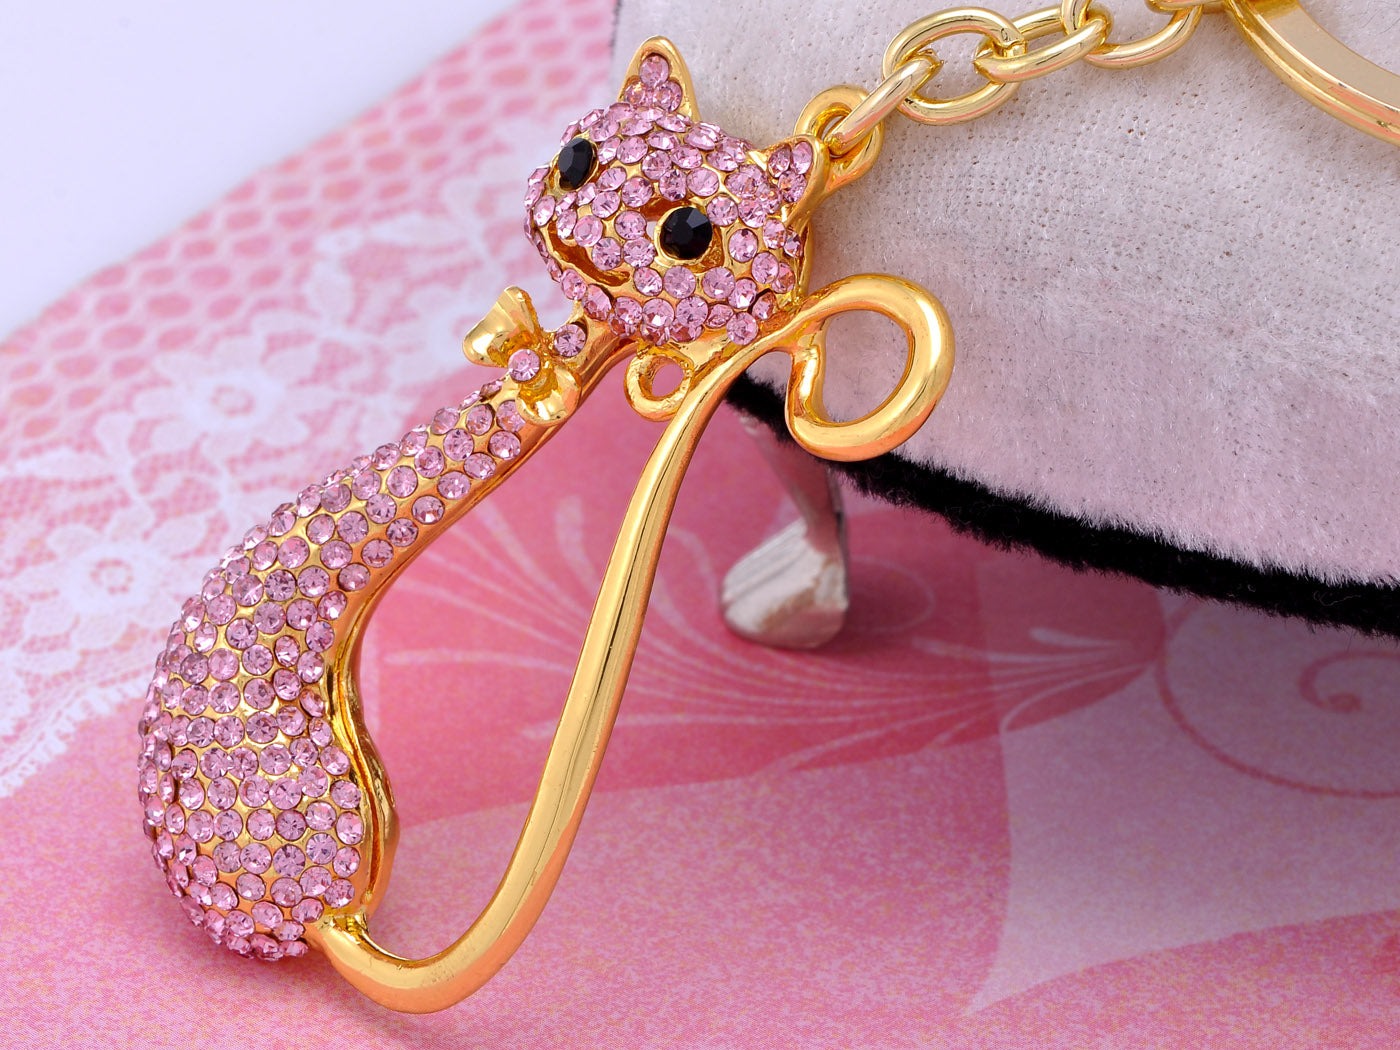 Bow Tie Light Rose Pink Pipe Kitten Cat Keychain